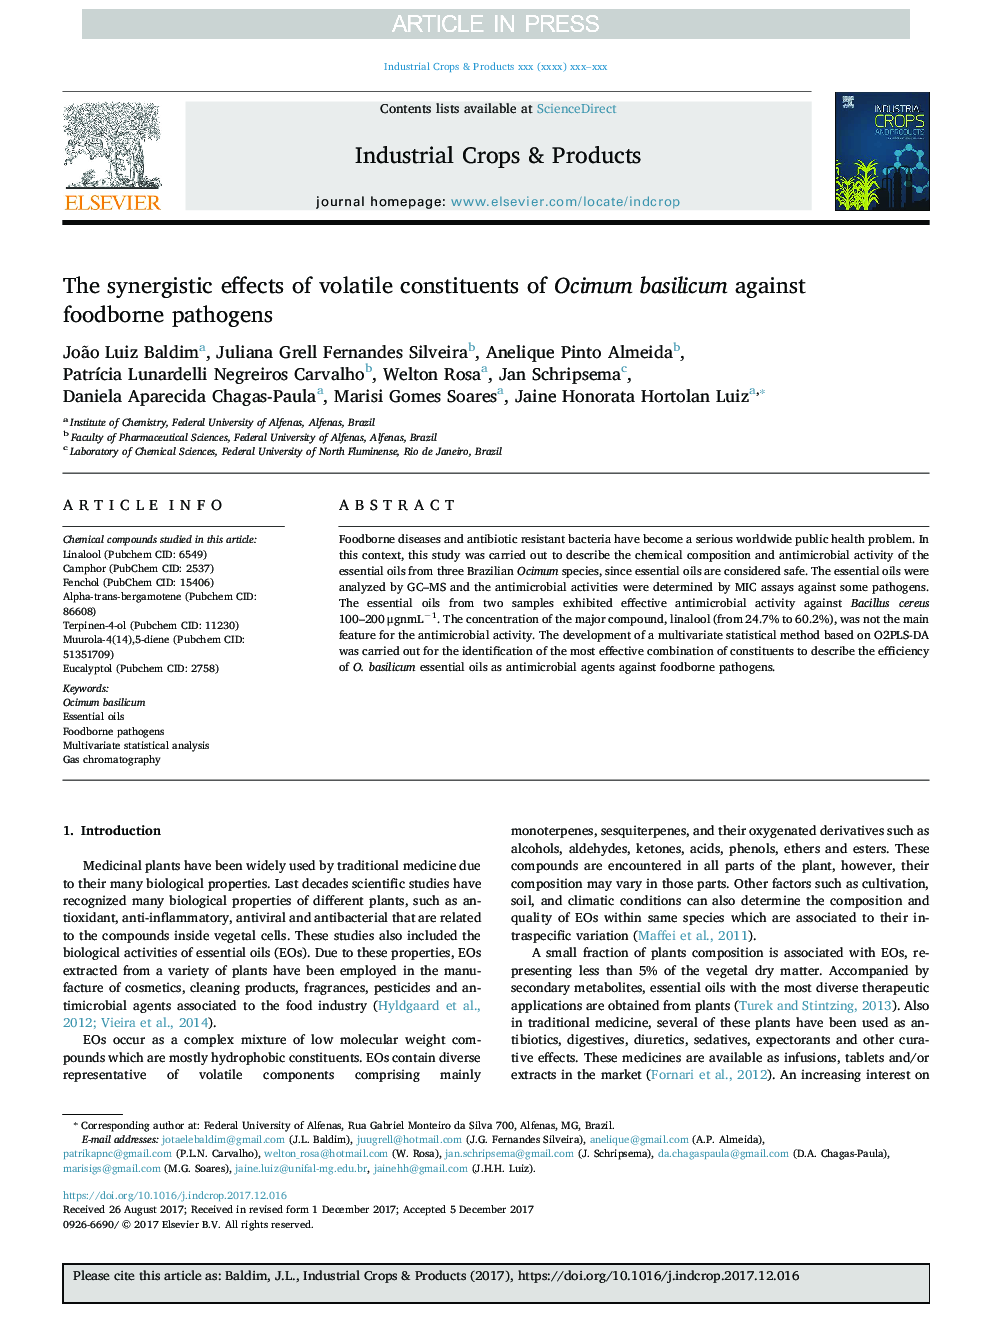 The synergistic effects of volatile constituents of Ocimum basilicum against foodborne pathogens